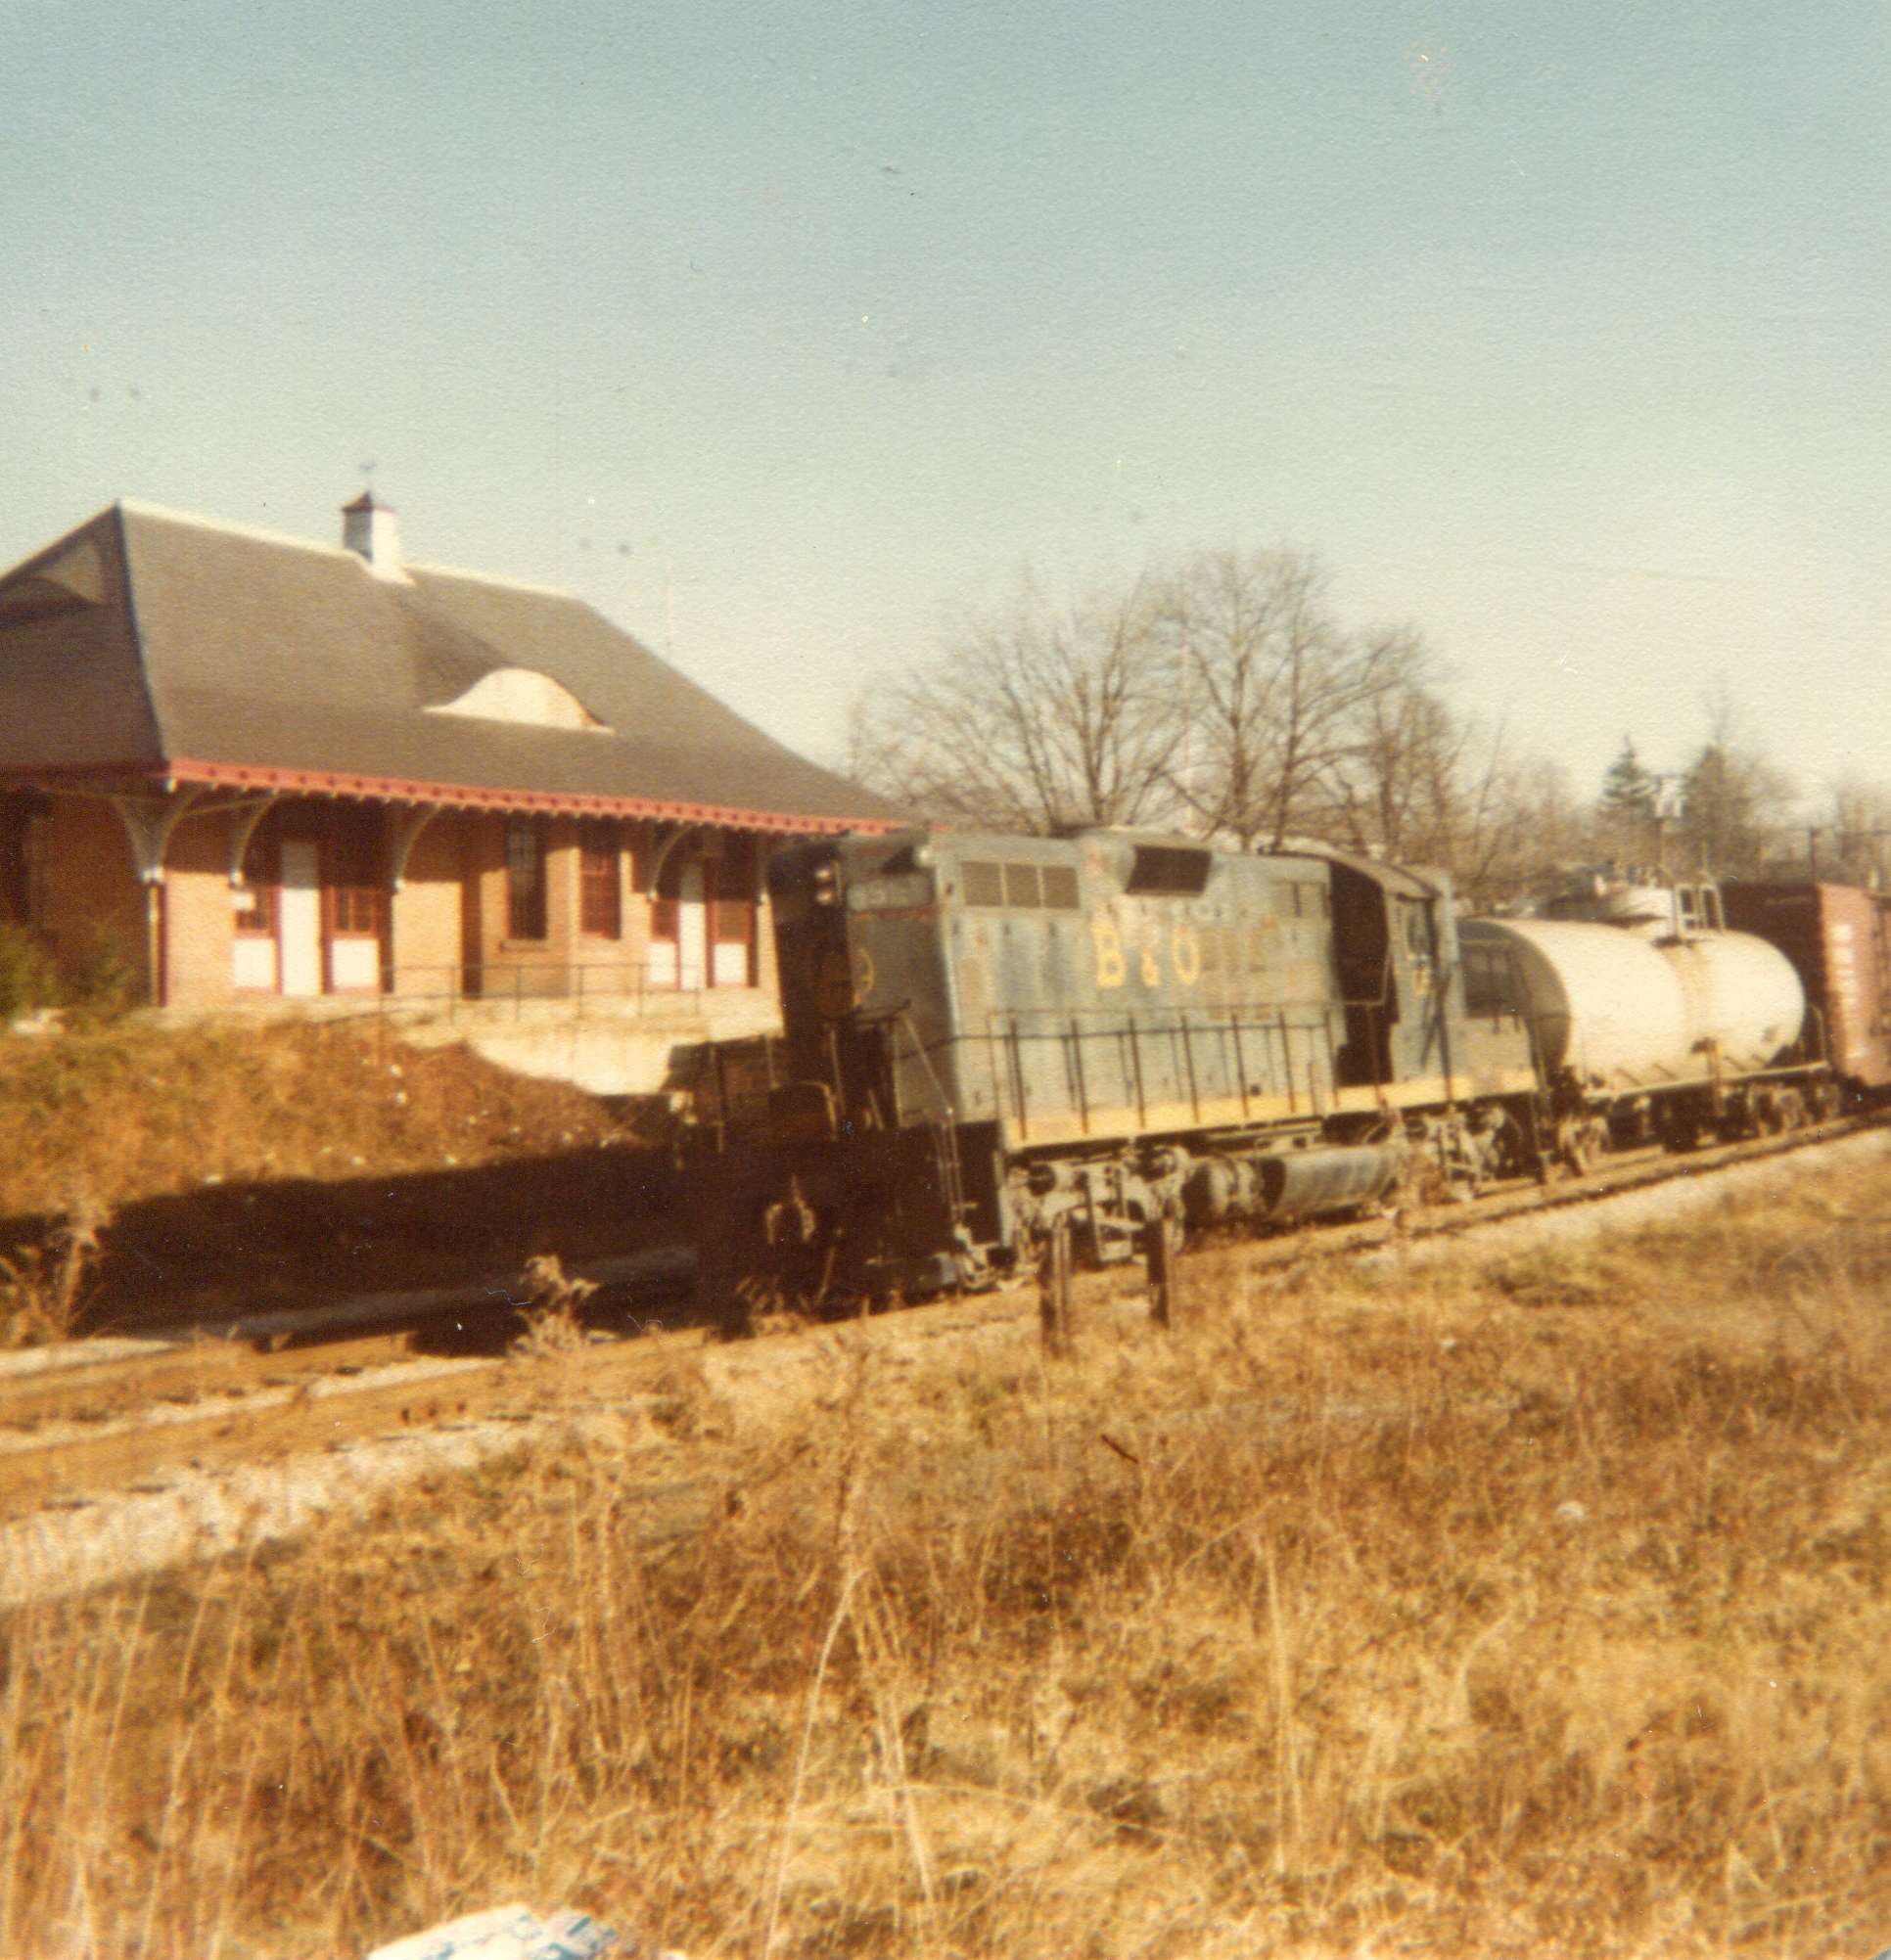 Photos of Emory Grove, Western Maryland Railroad(CSX), Glyndon, Md. circa 1976-1980